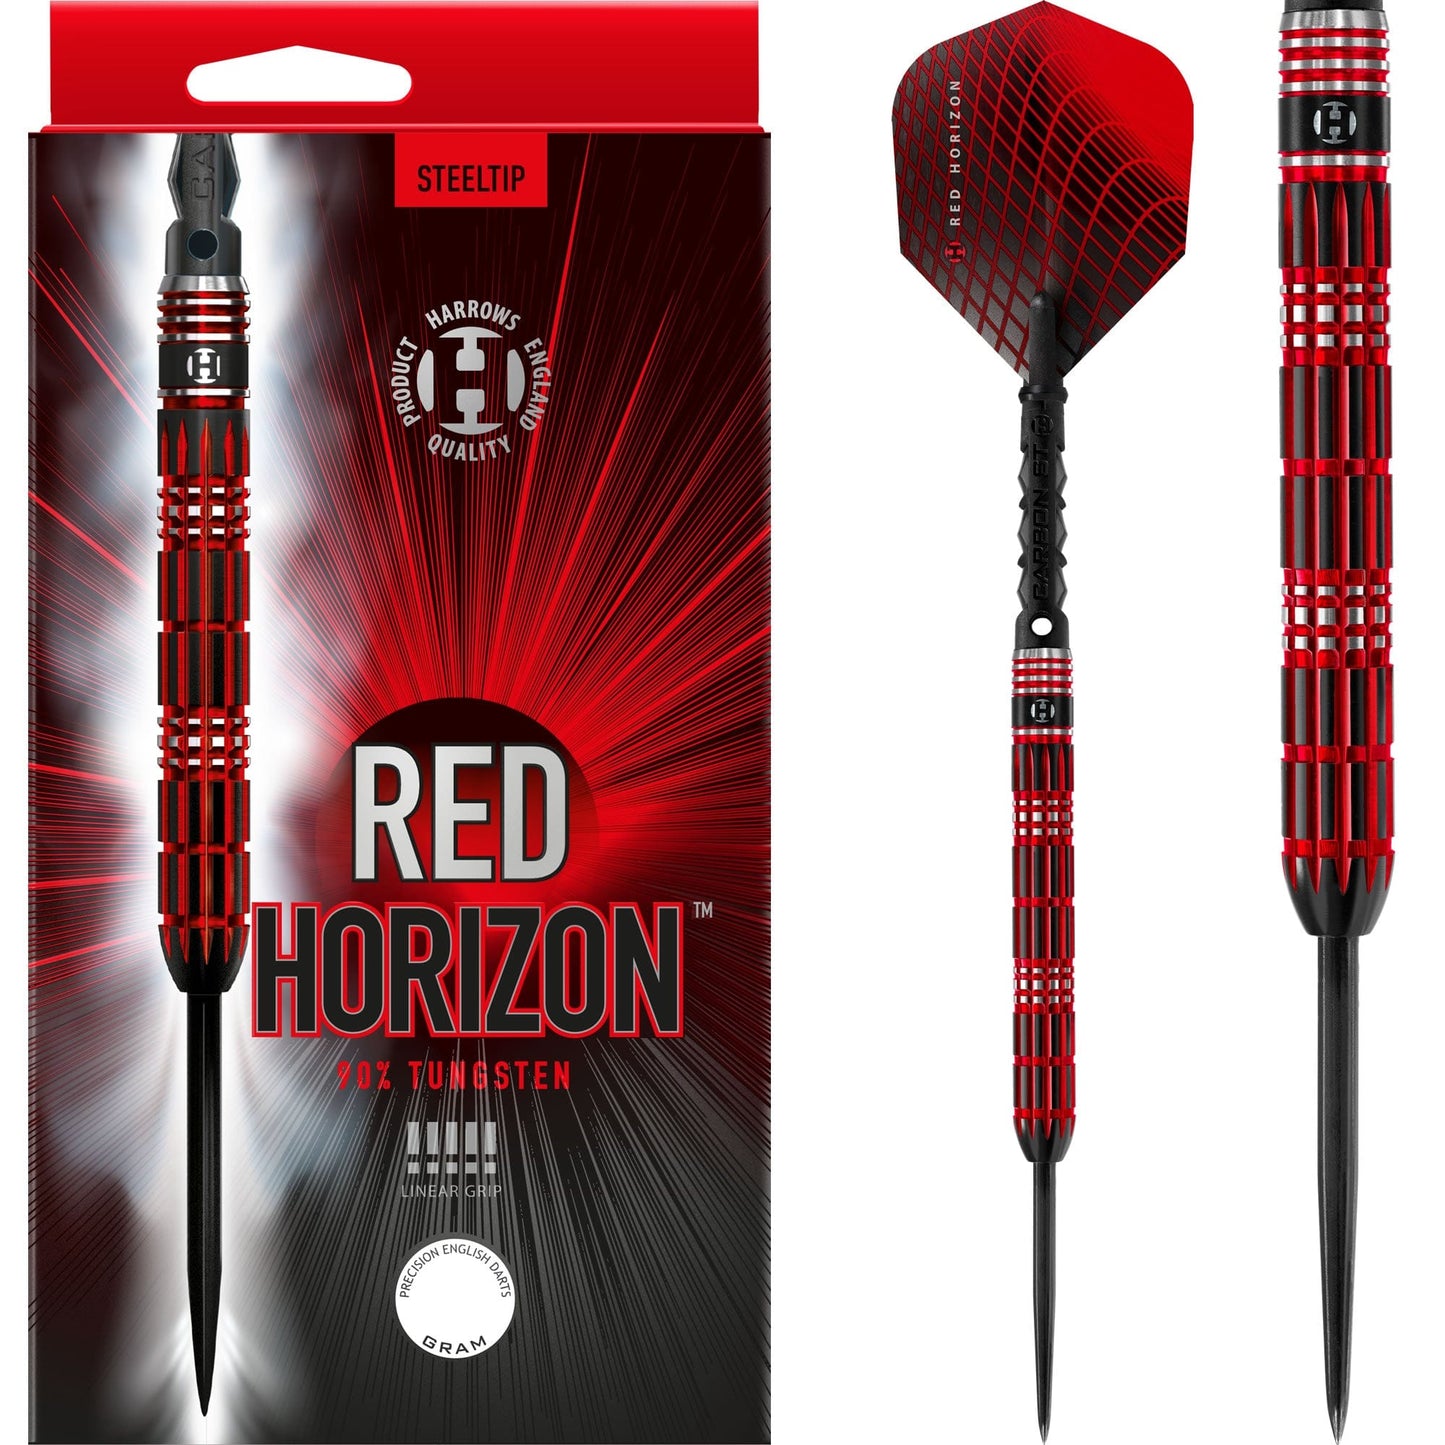 Harrows Red Horizon Darts - Steel Tip - Black & Red 21g